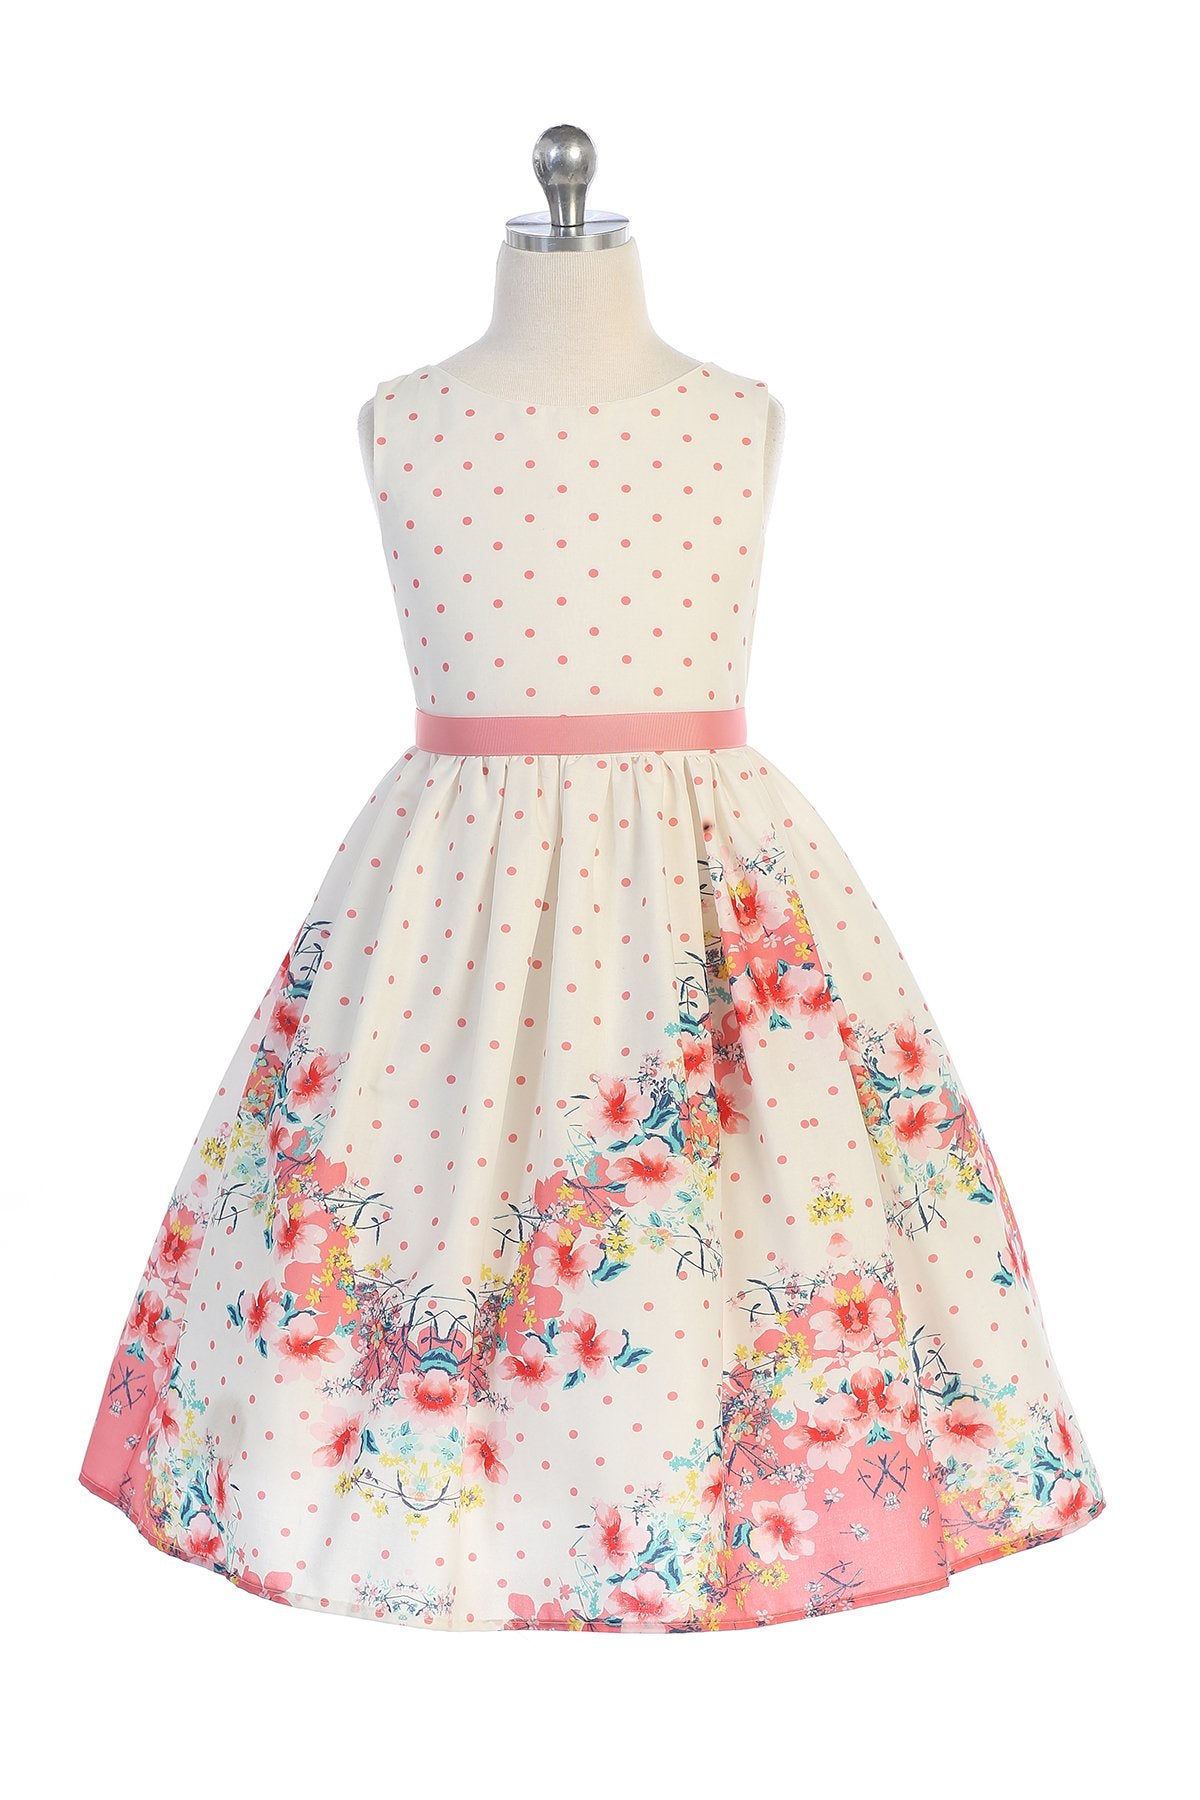 Dress - Chevron Floral Cotton Dress